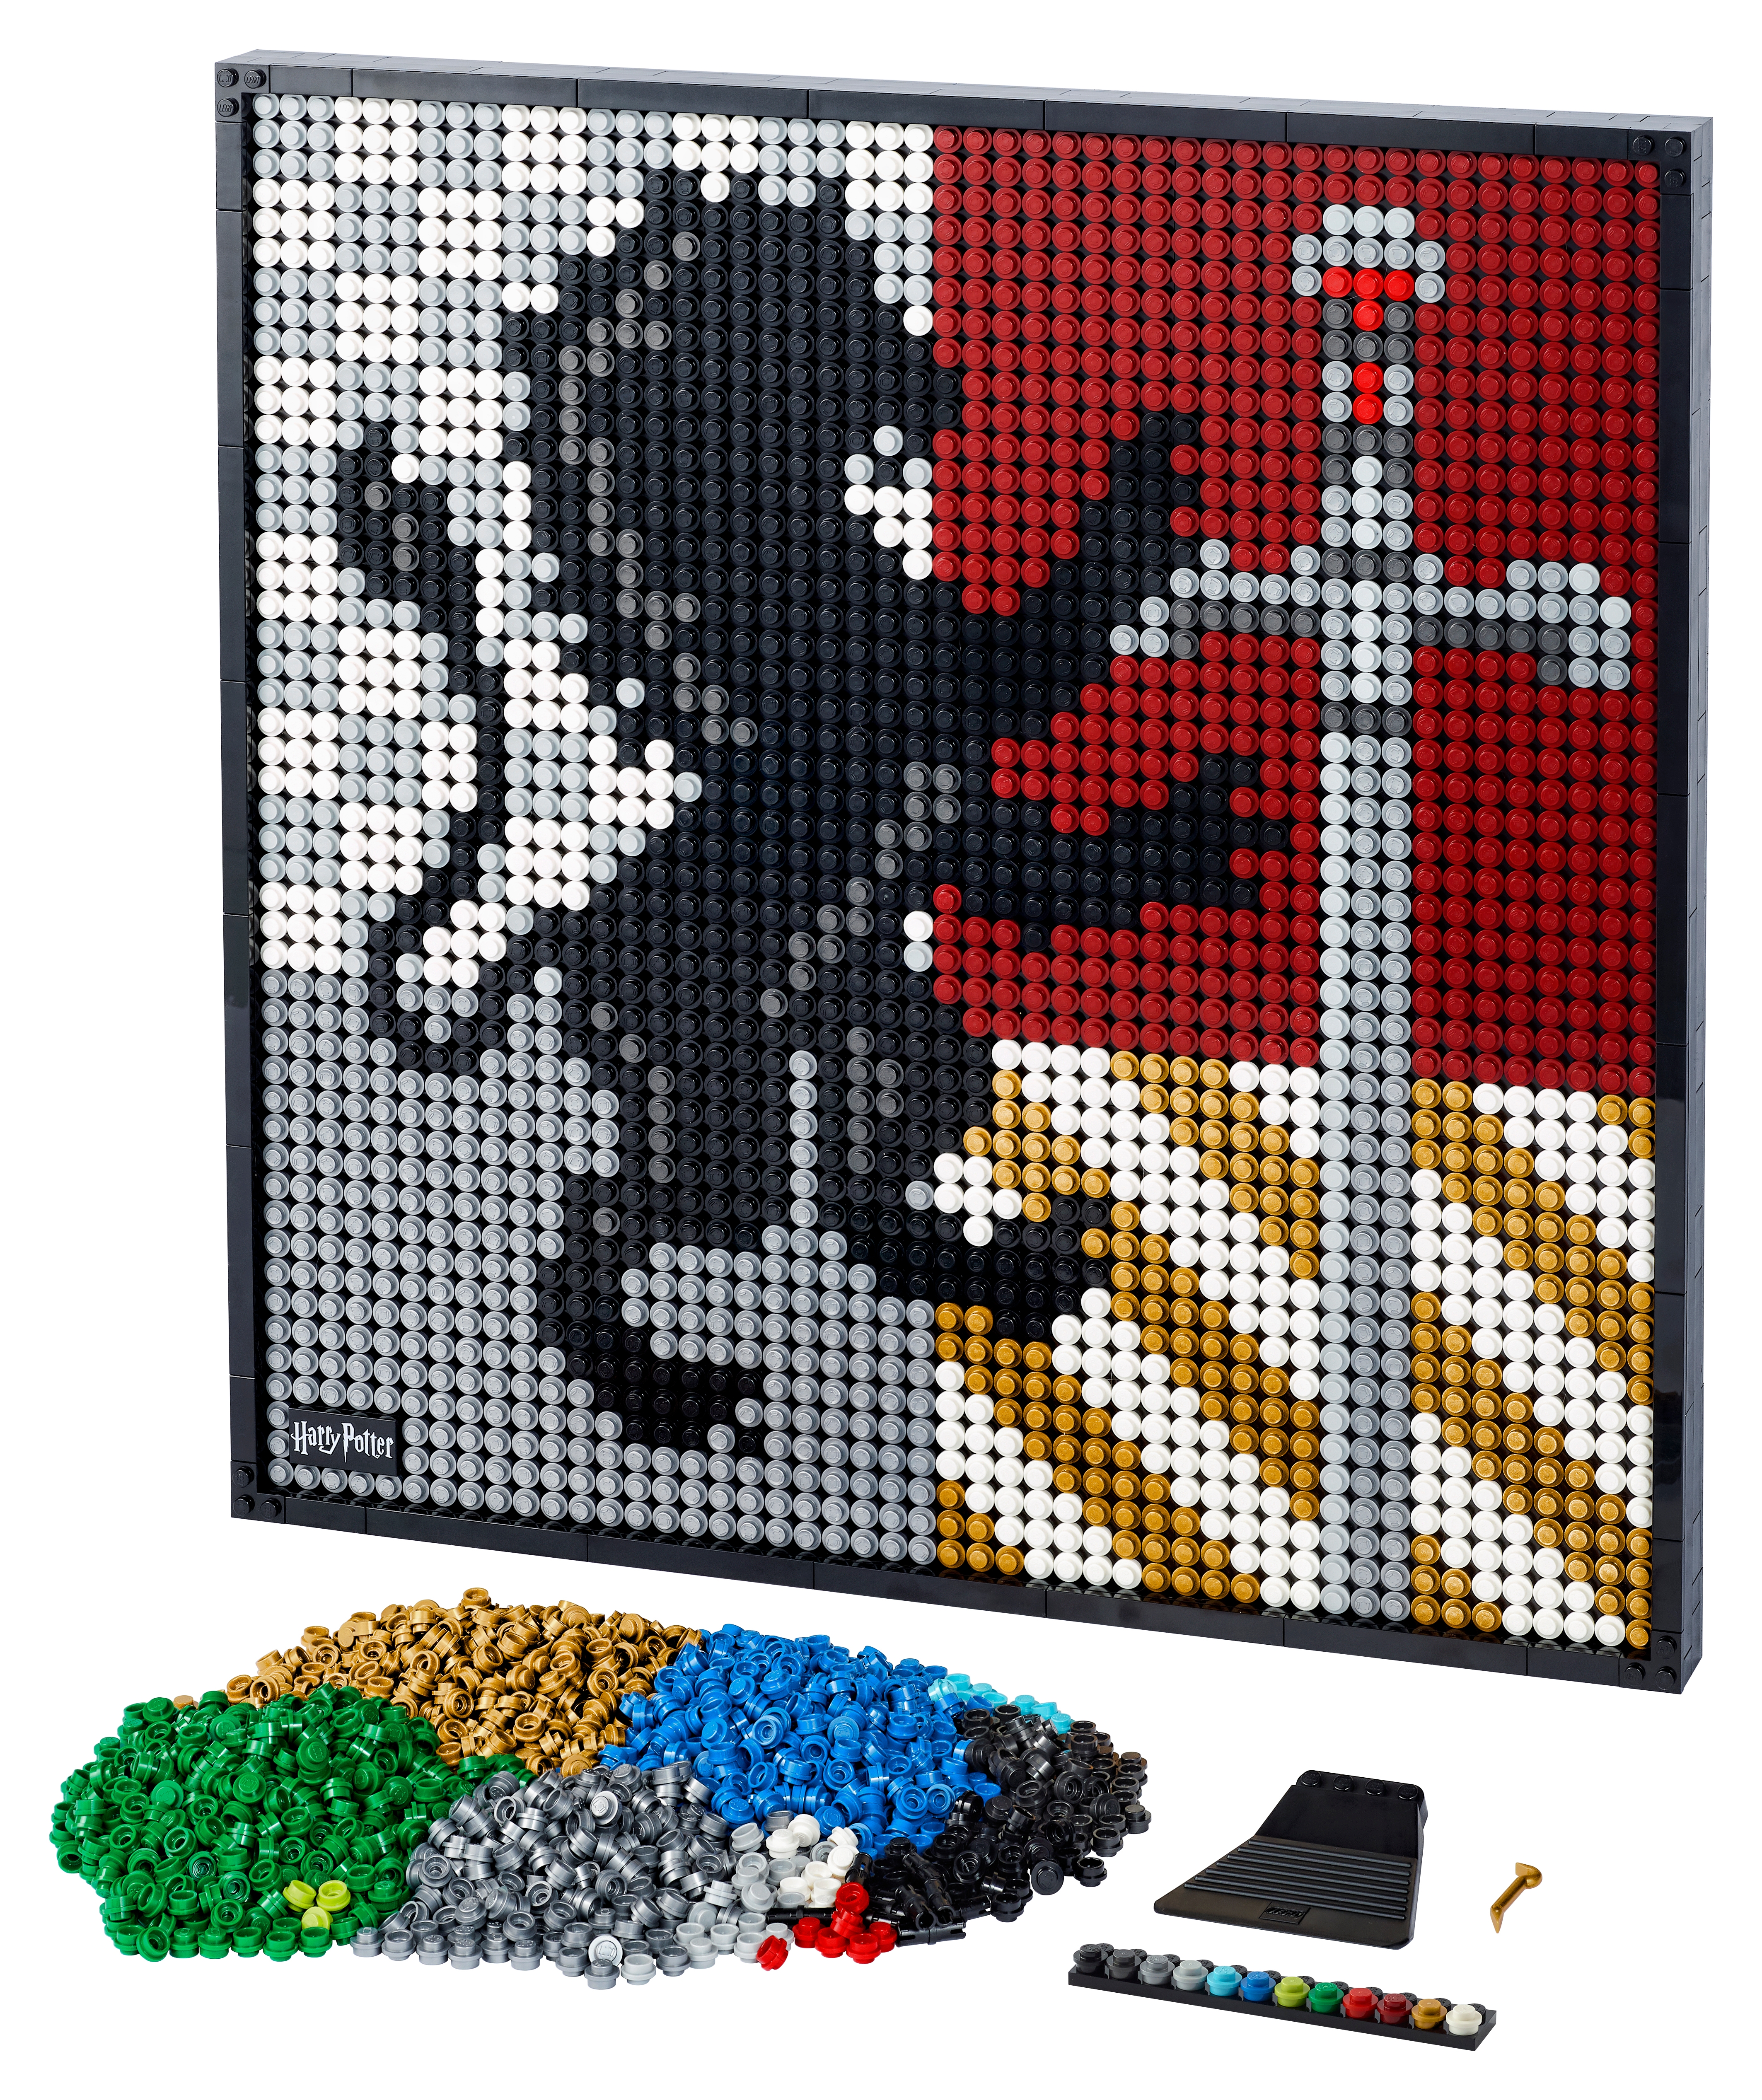 LEGO SPIDERMAN CANVAS  ART BLOCKS/ WALL ART PLAQUES/PICTURES 